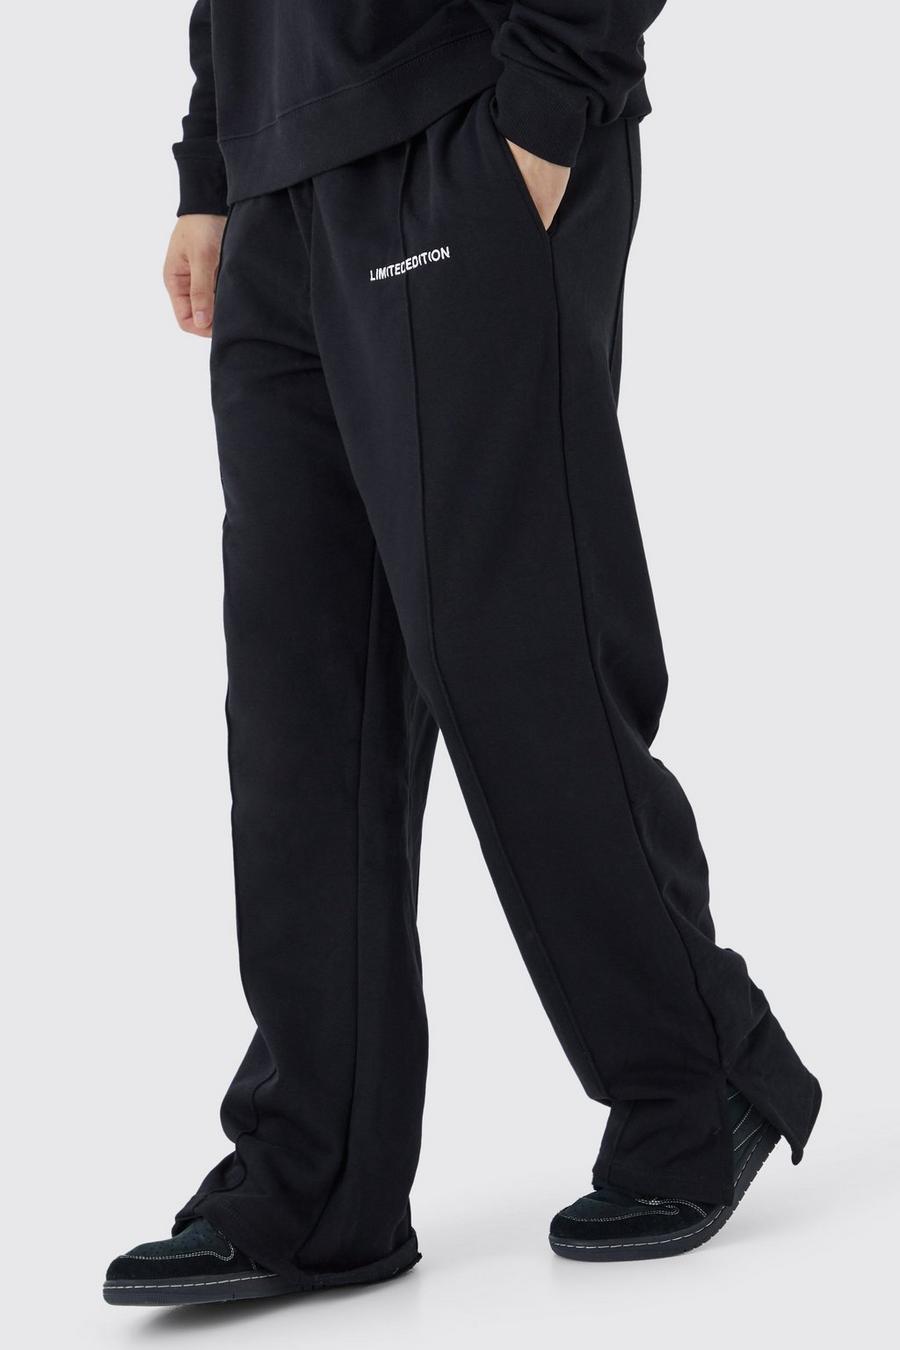 Men's Tall Fit Sweatpants - Men's Sweatpants & Trousers - New In